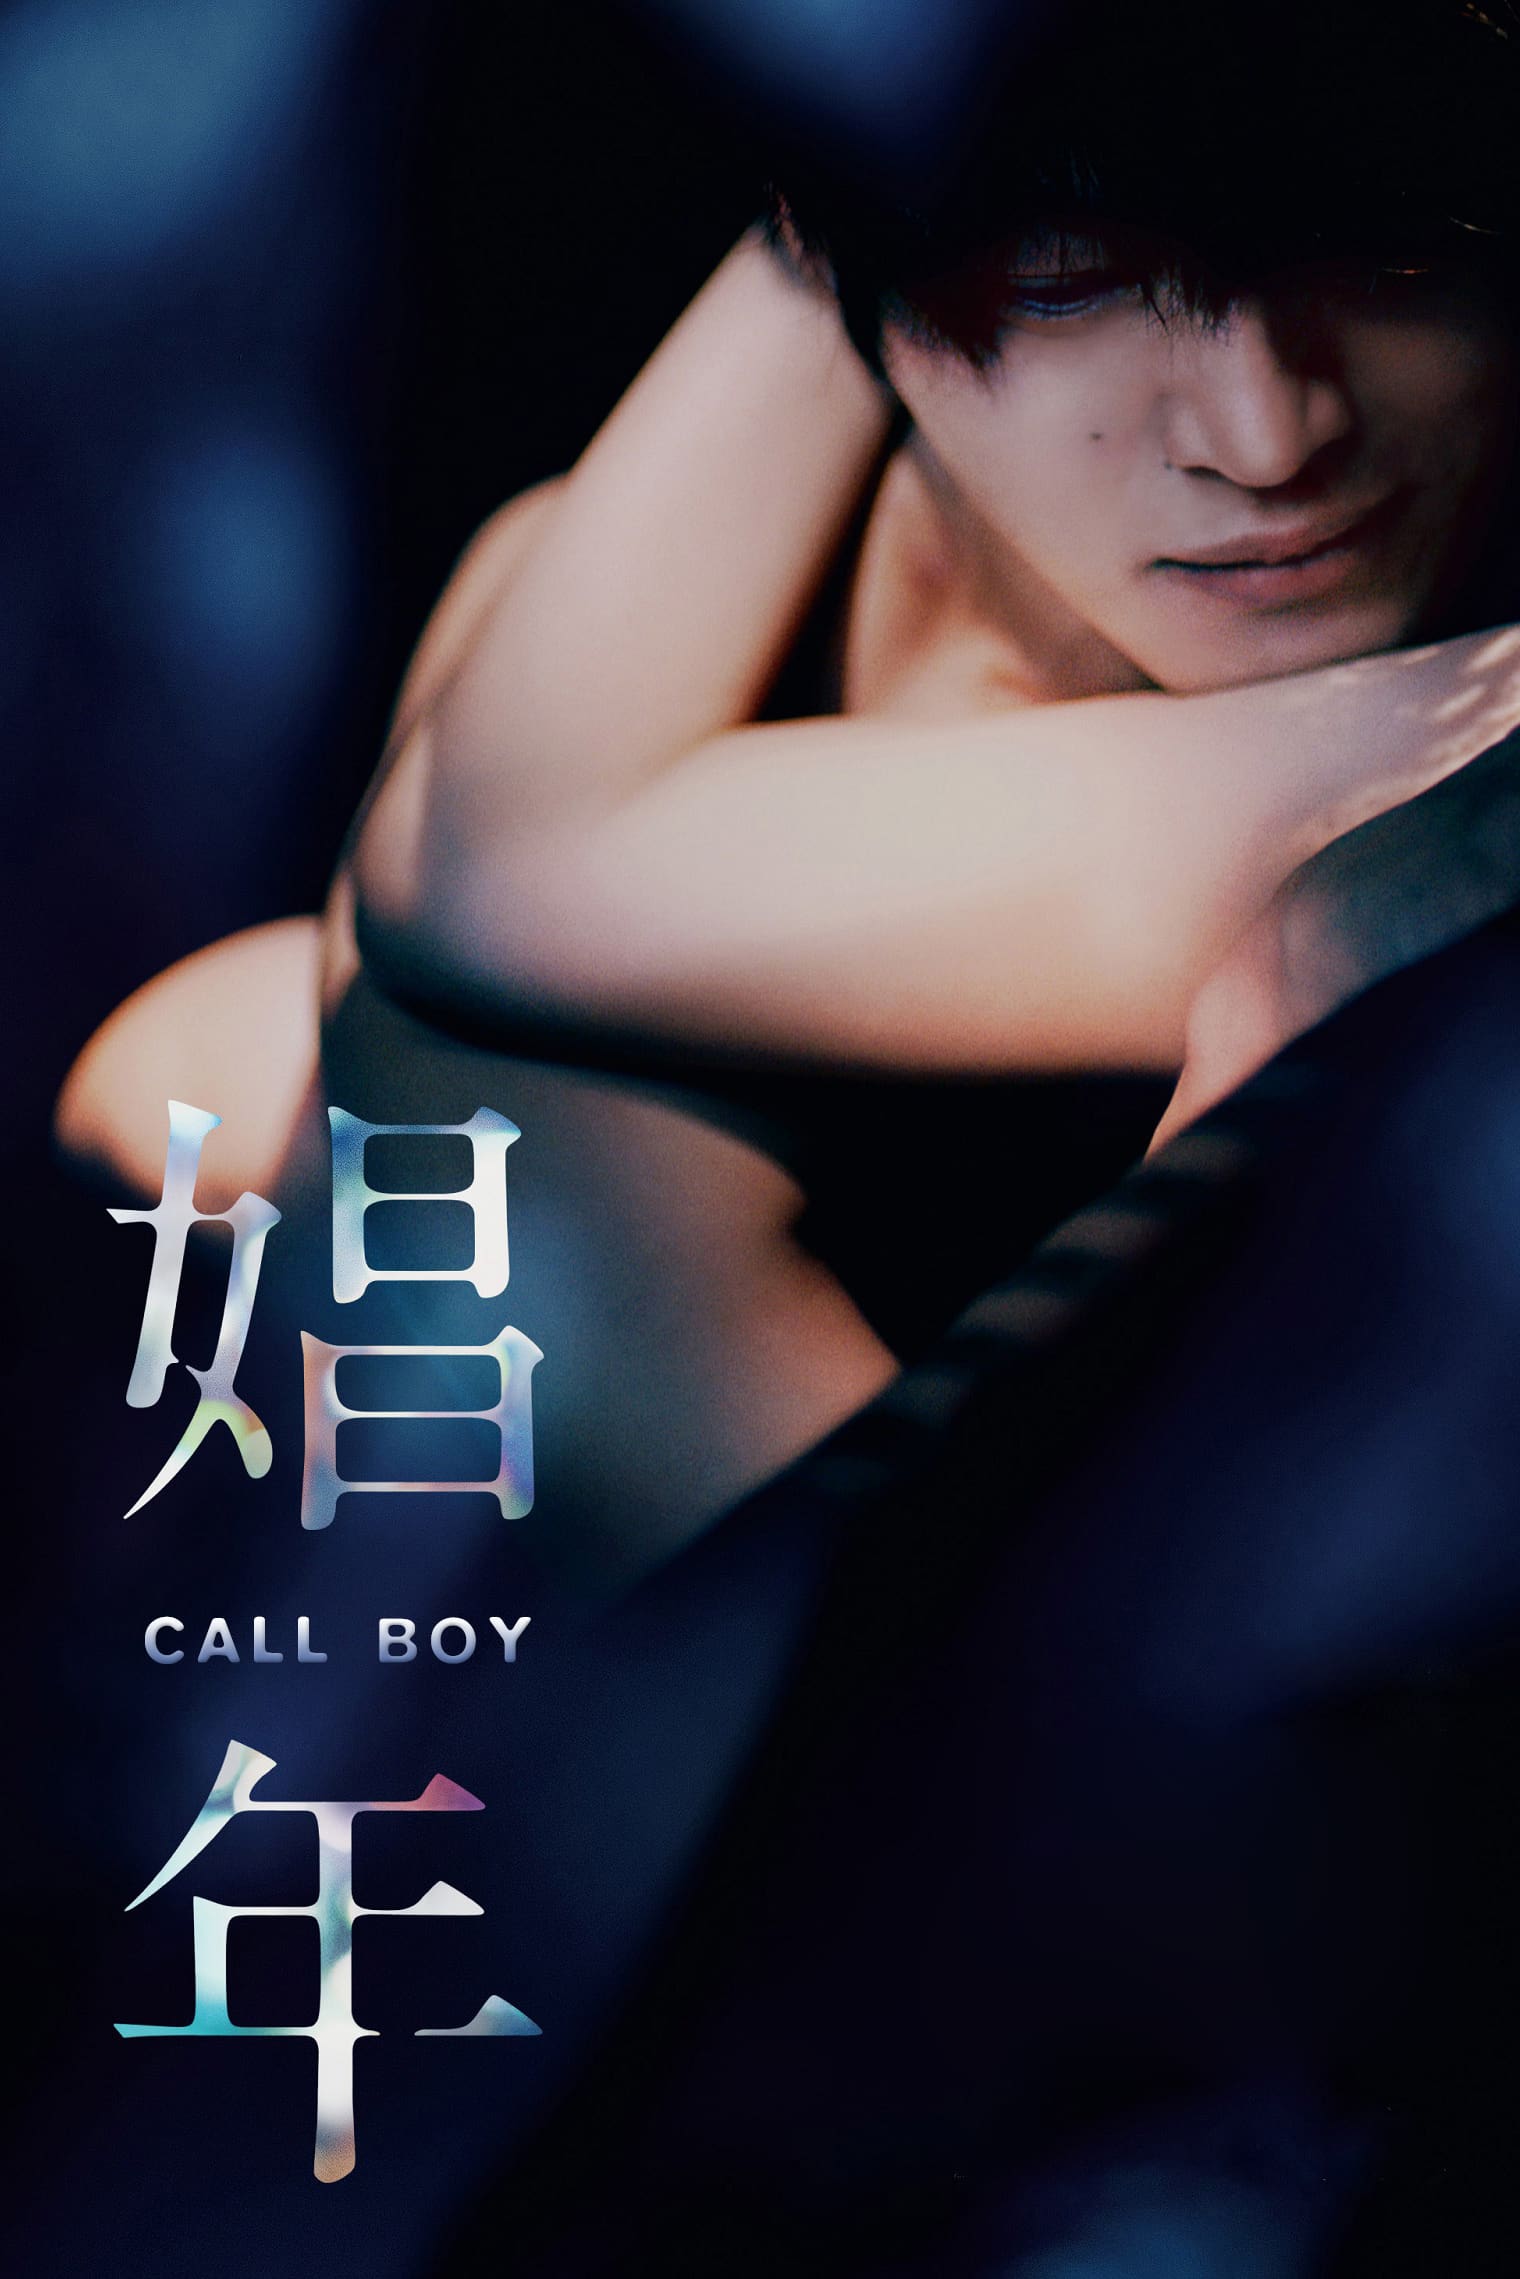 Call boy japanese movie